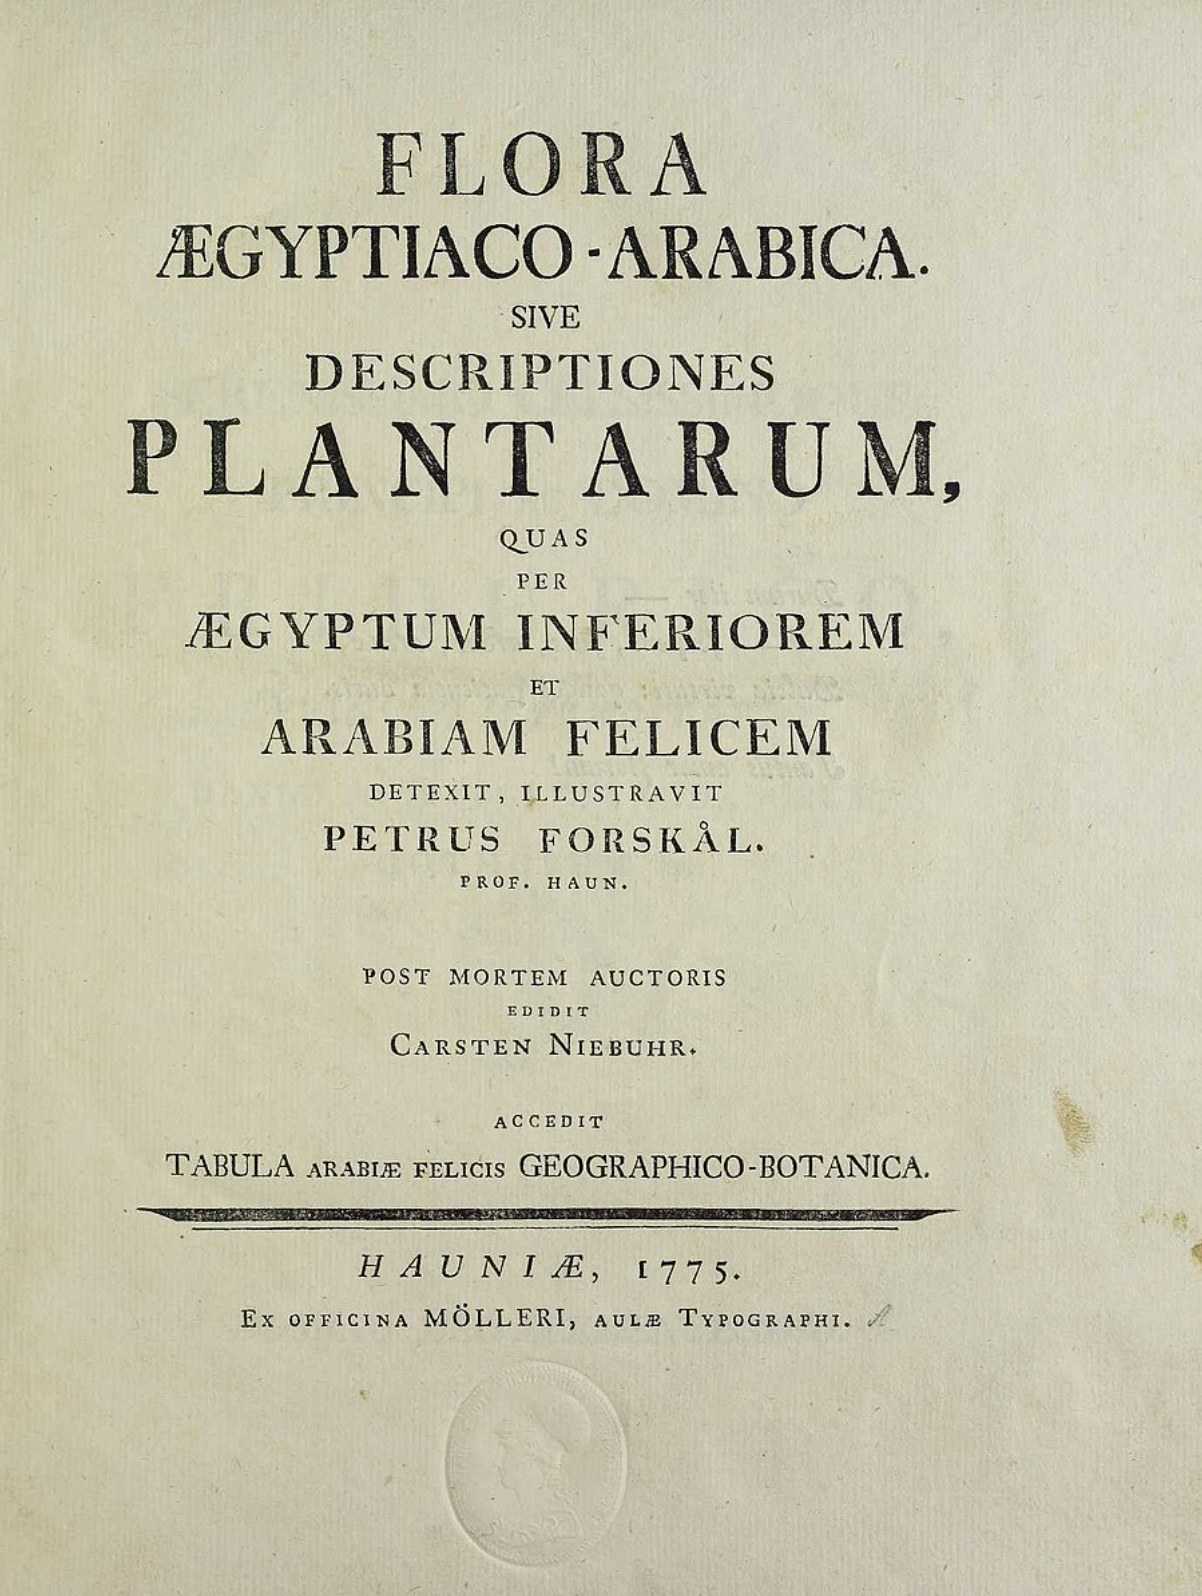 Peter Forsskal's Flora Aegyptiaco-Arabica, 1775